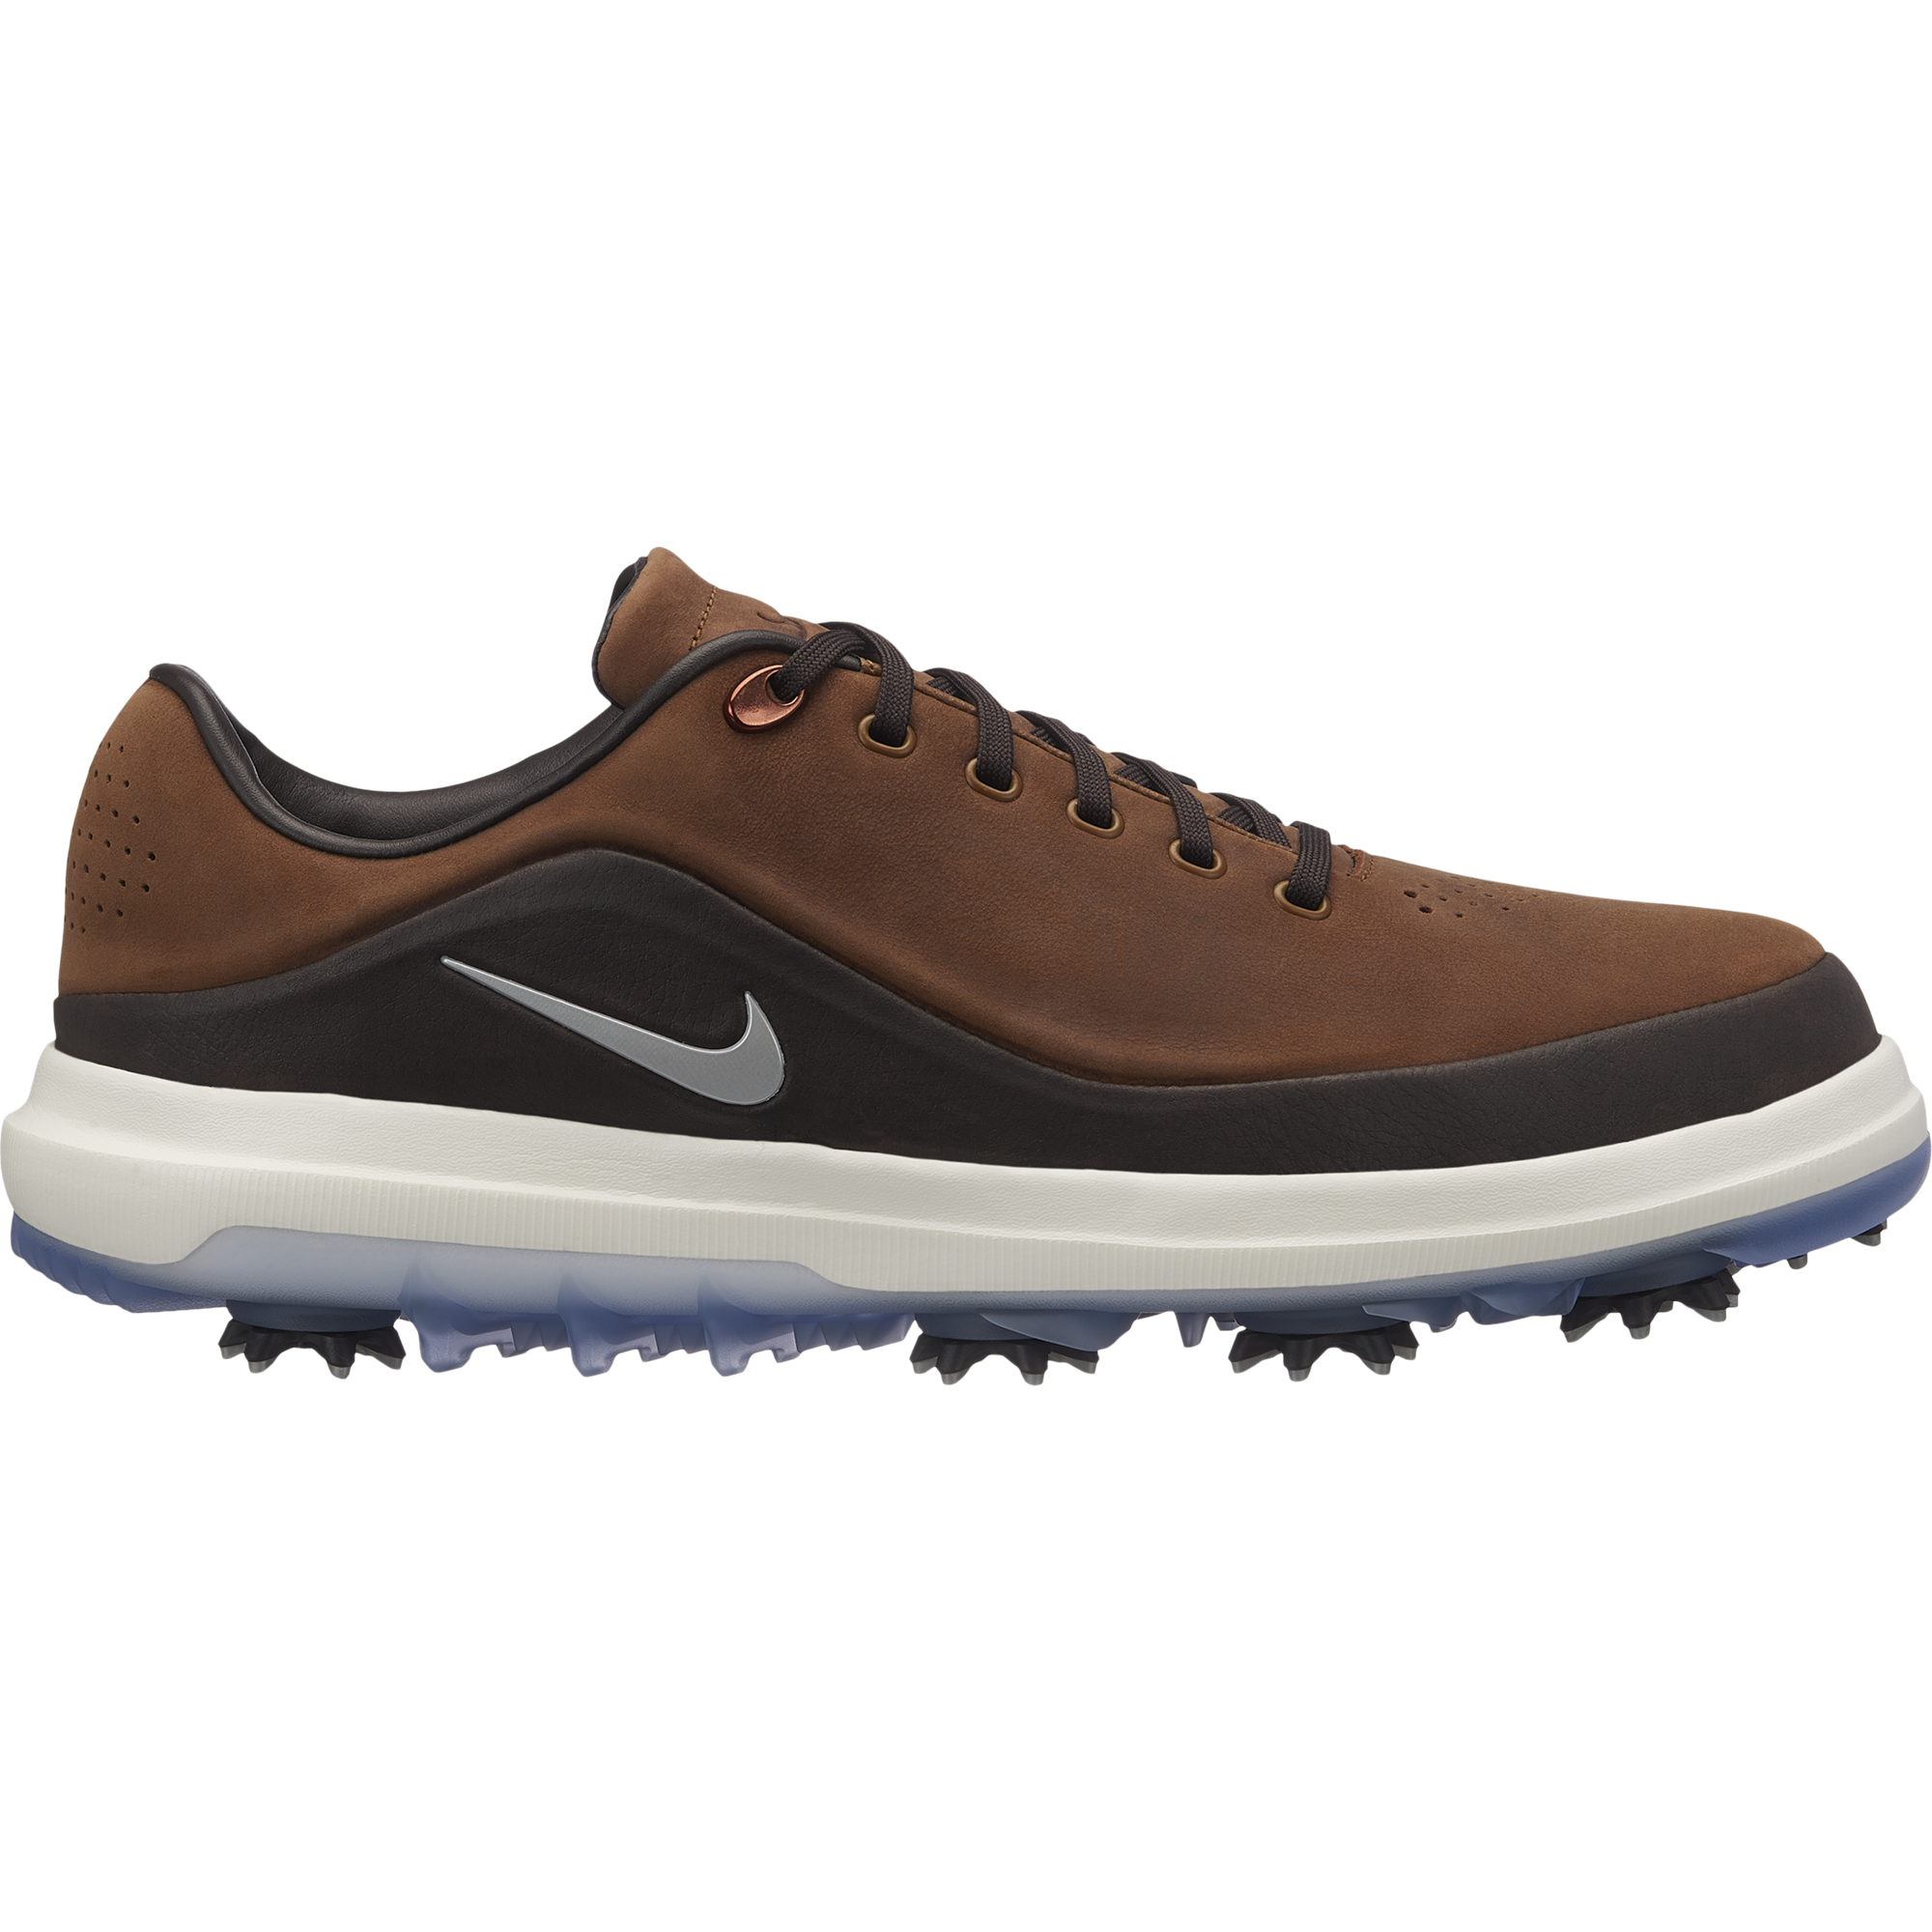 Nike Air Zoom Precision Men's Golf Shoe - Brown/Black